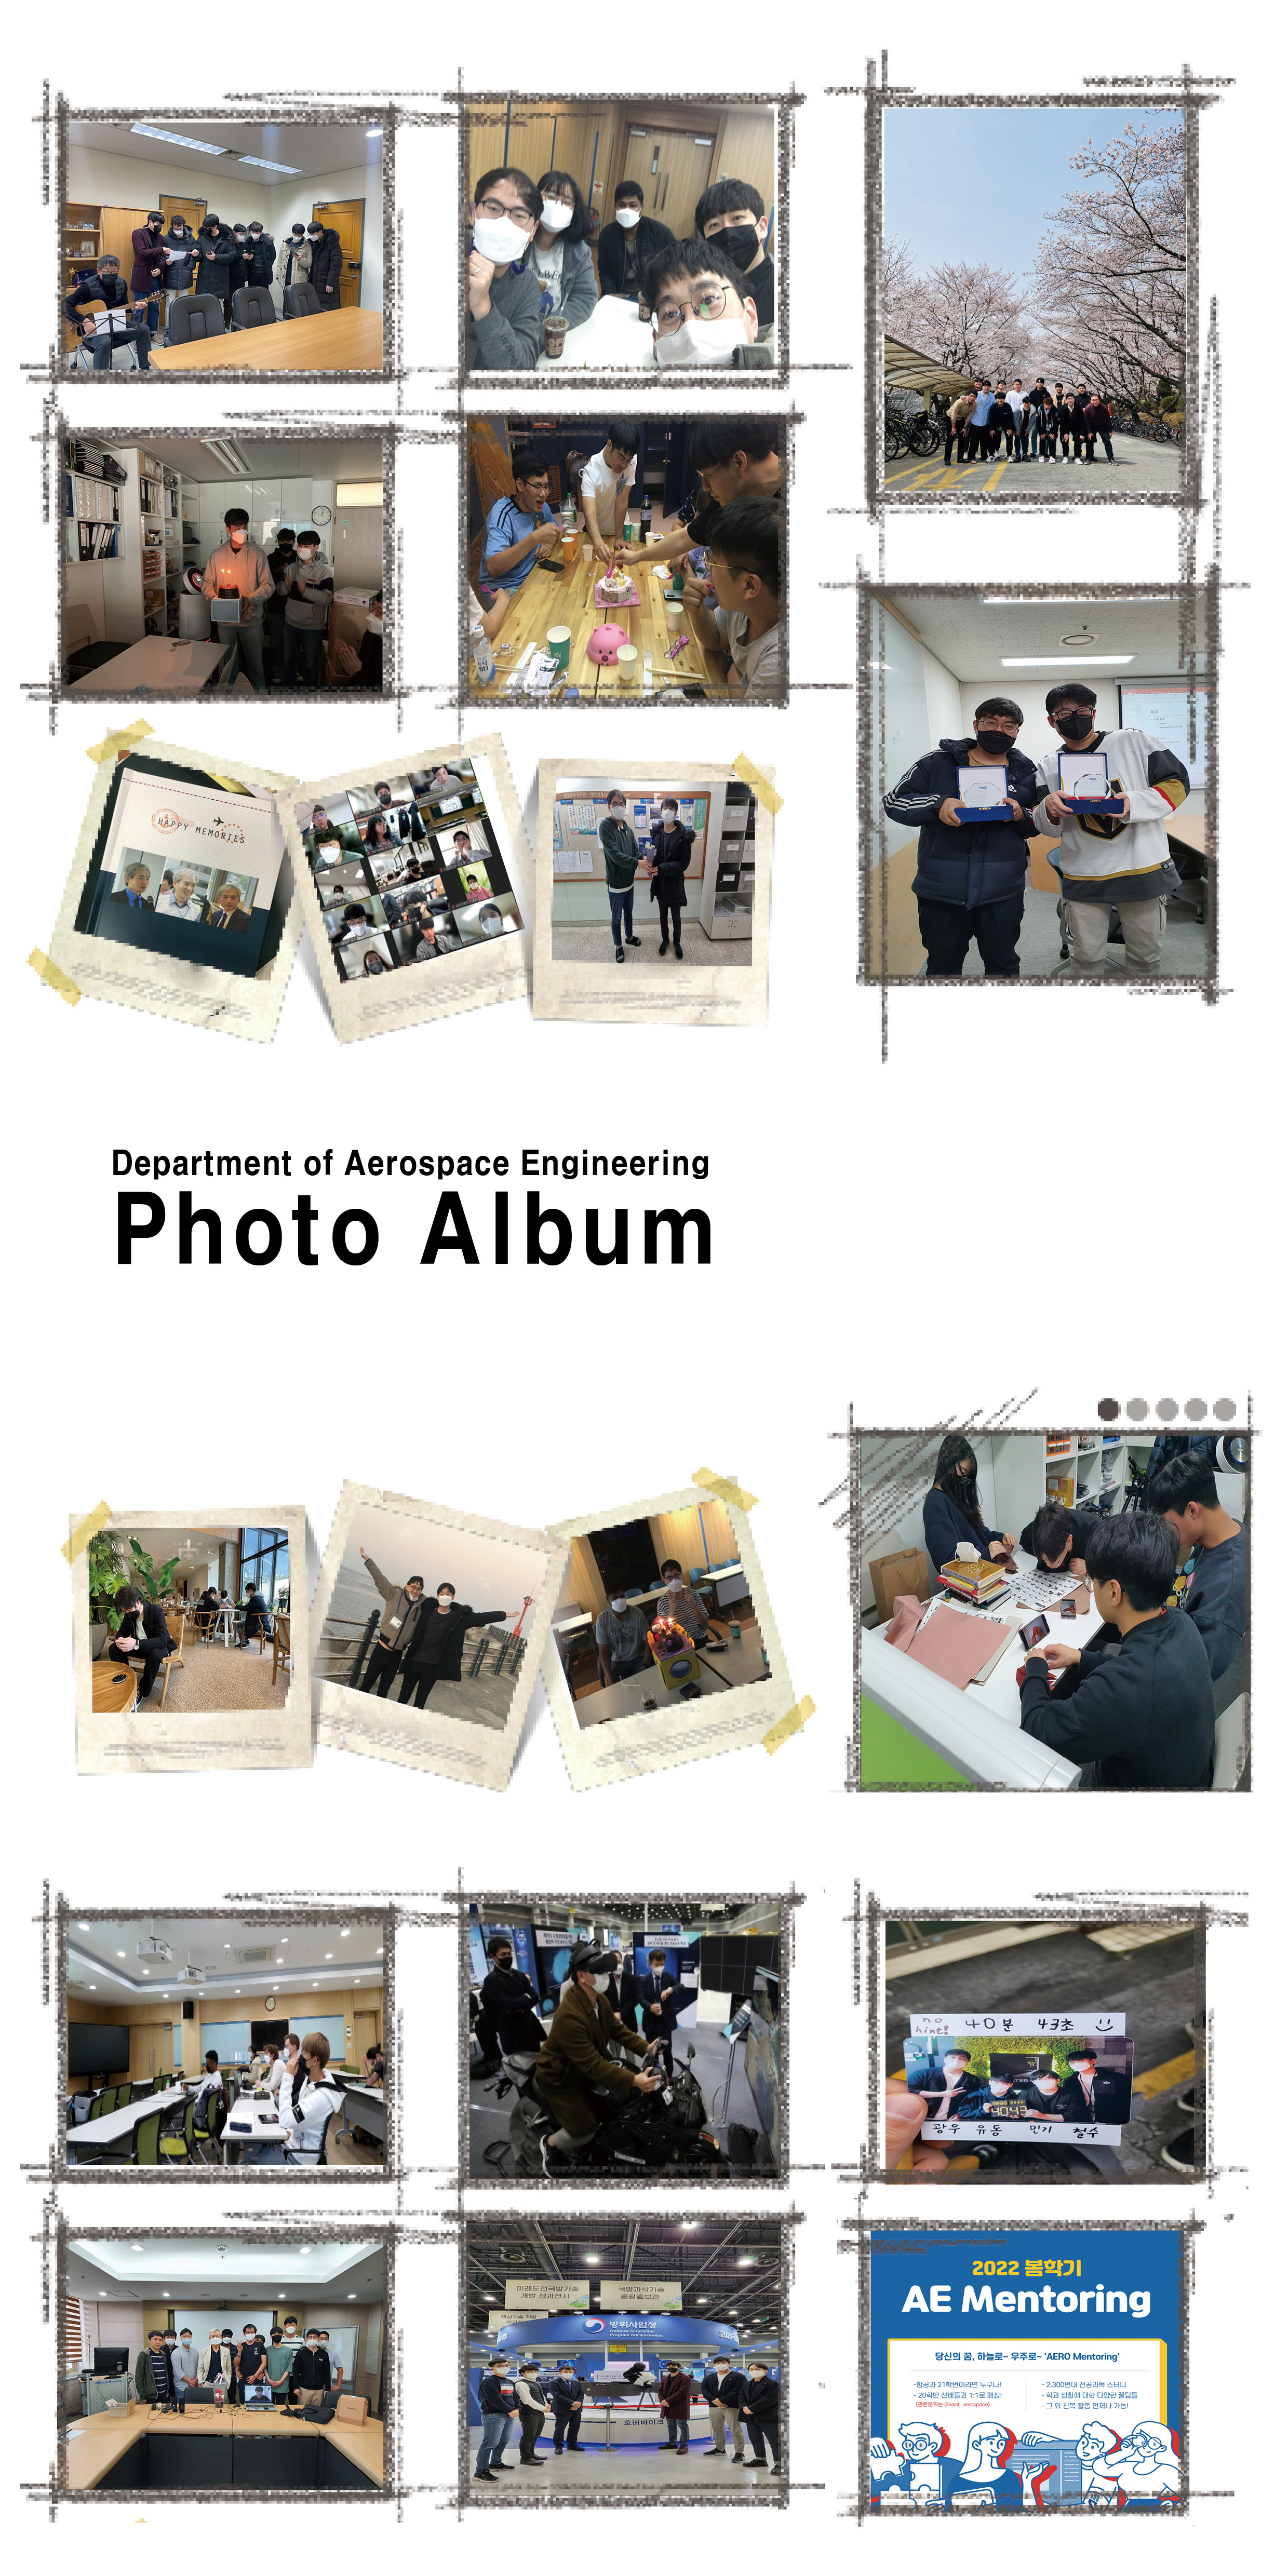 Ver44_PhotoAlbum.jpg